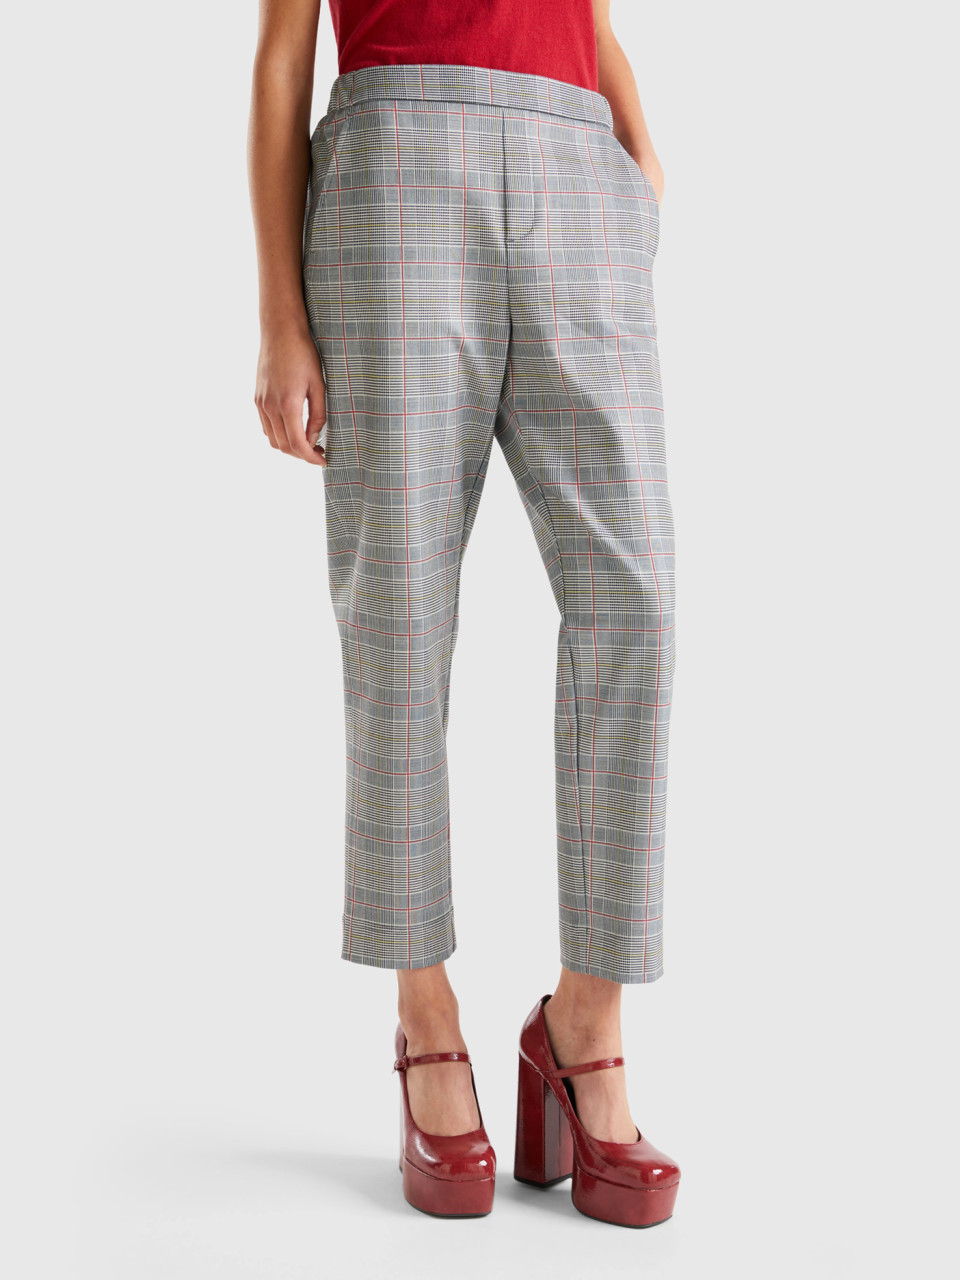 Benetton, Patterned Pants With Elastic Waist, Light Gray, Women